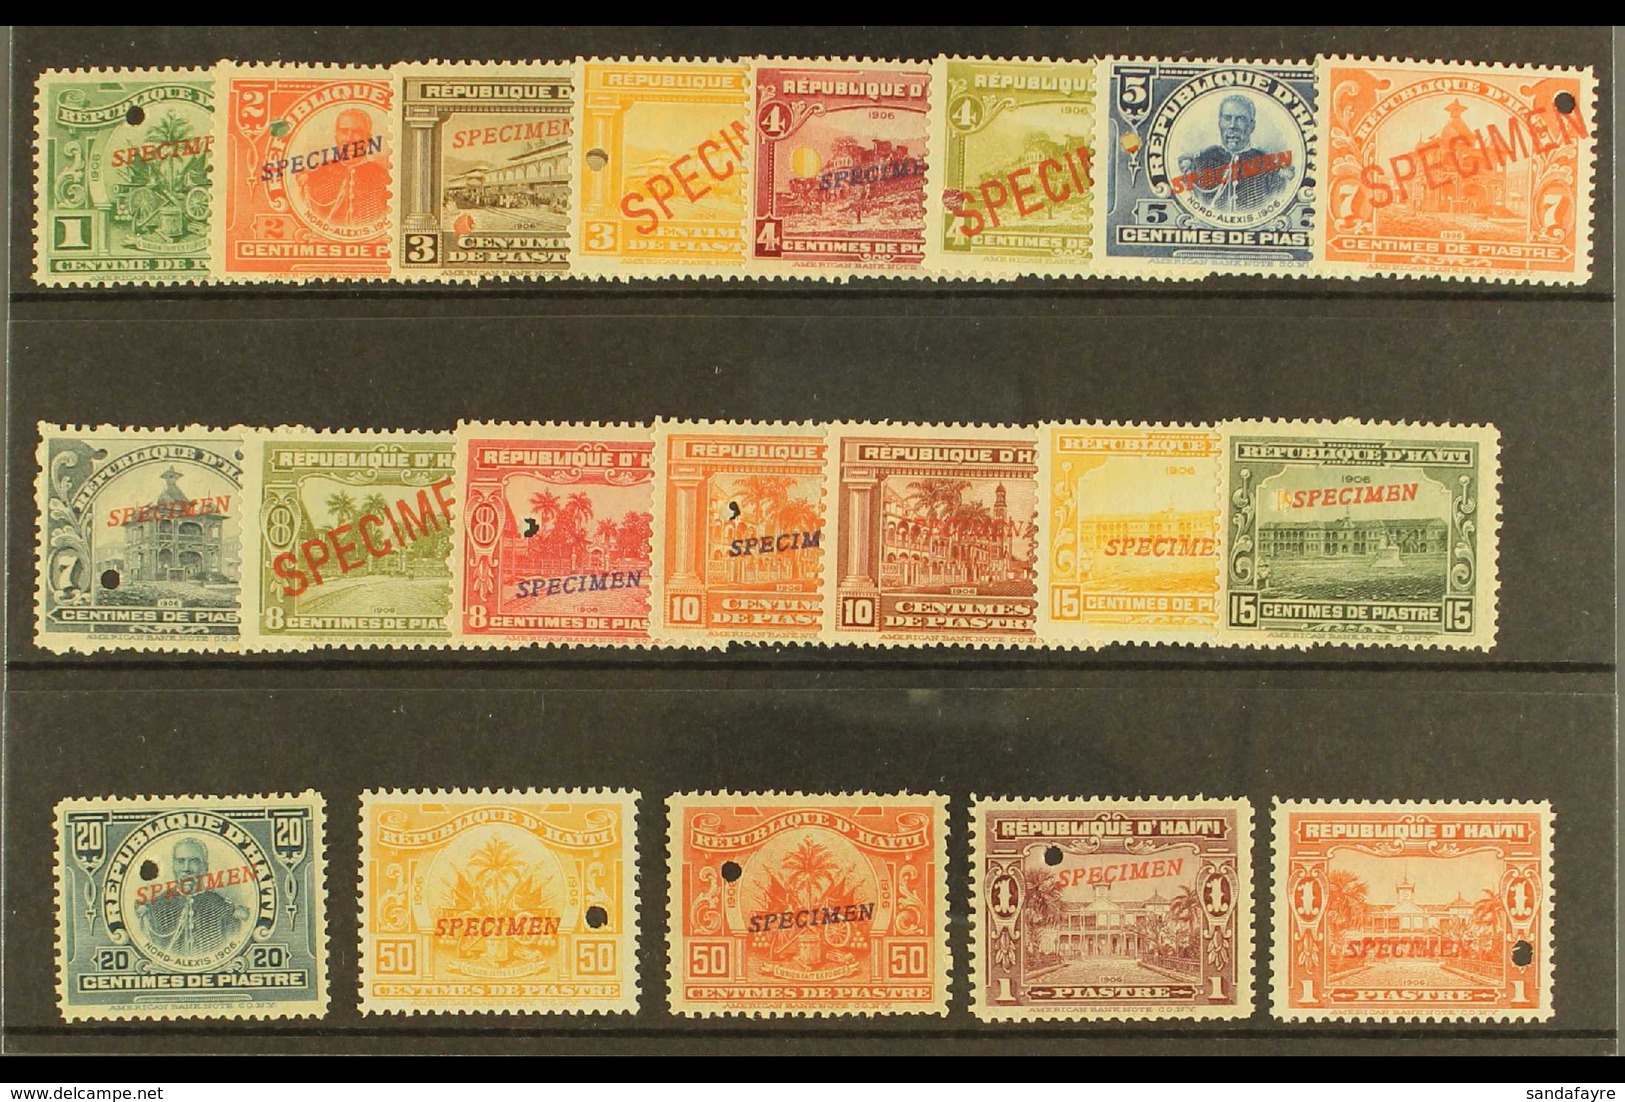 1906-13 Foreign Postage Complete Set With "SPECIMEN" Overprints (Scott 125/44, SG 137/49 & 167/73), Very Fine Never Hing - Haïti